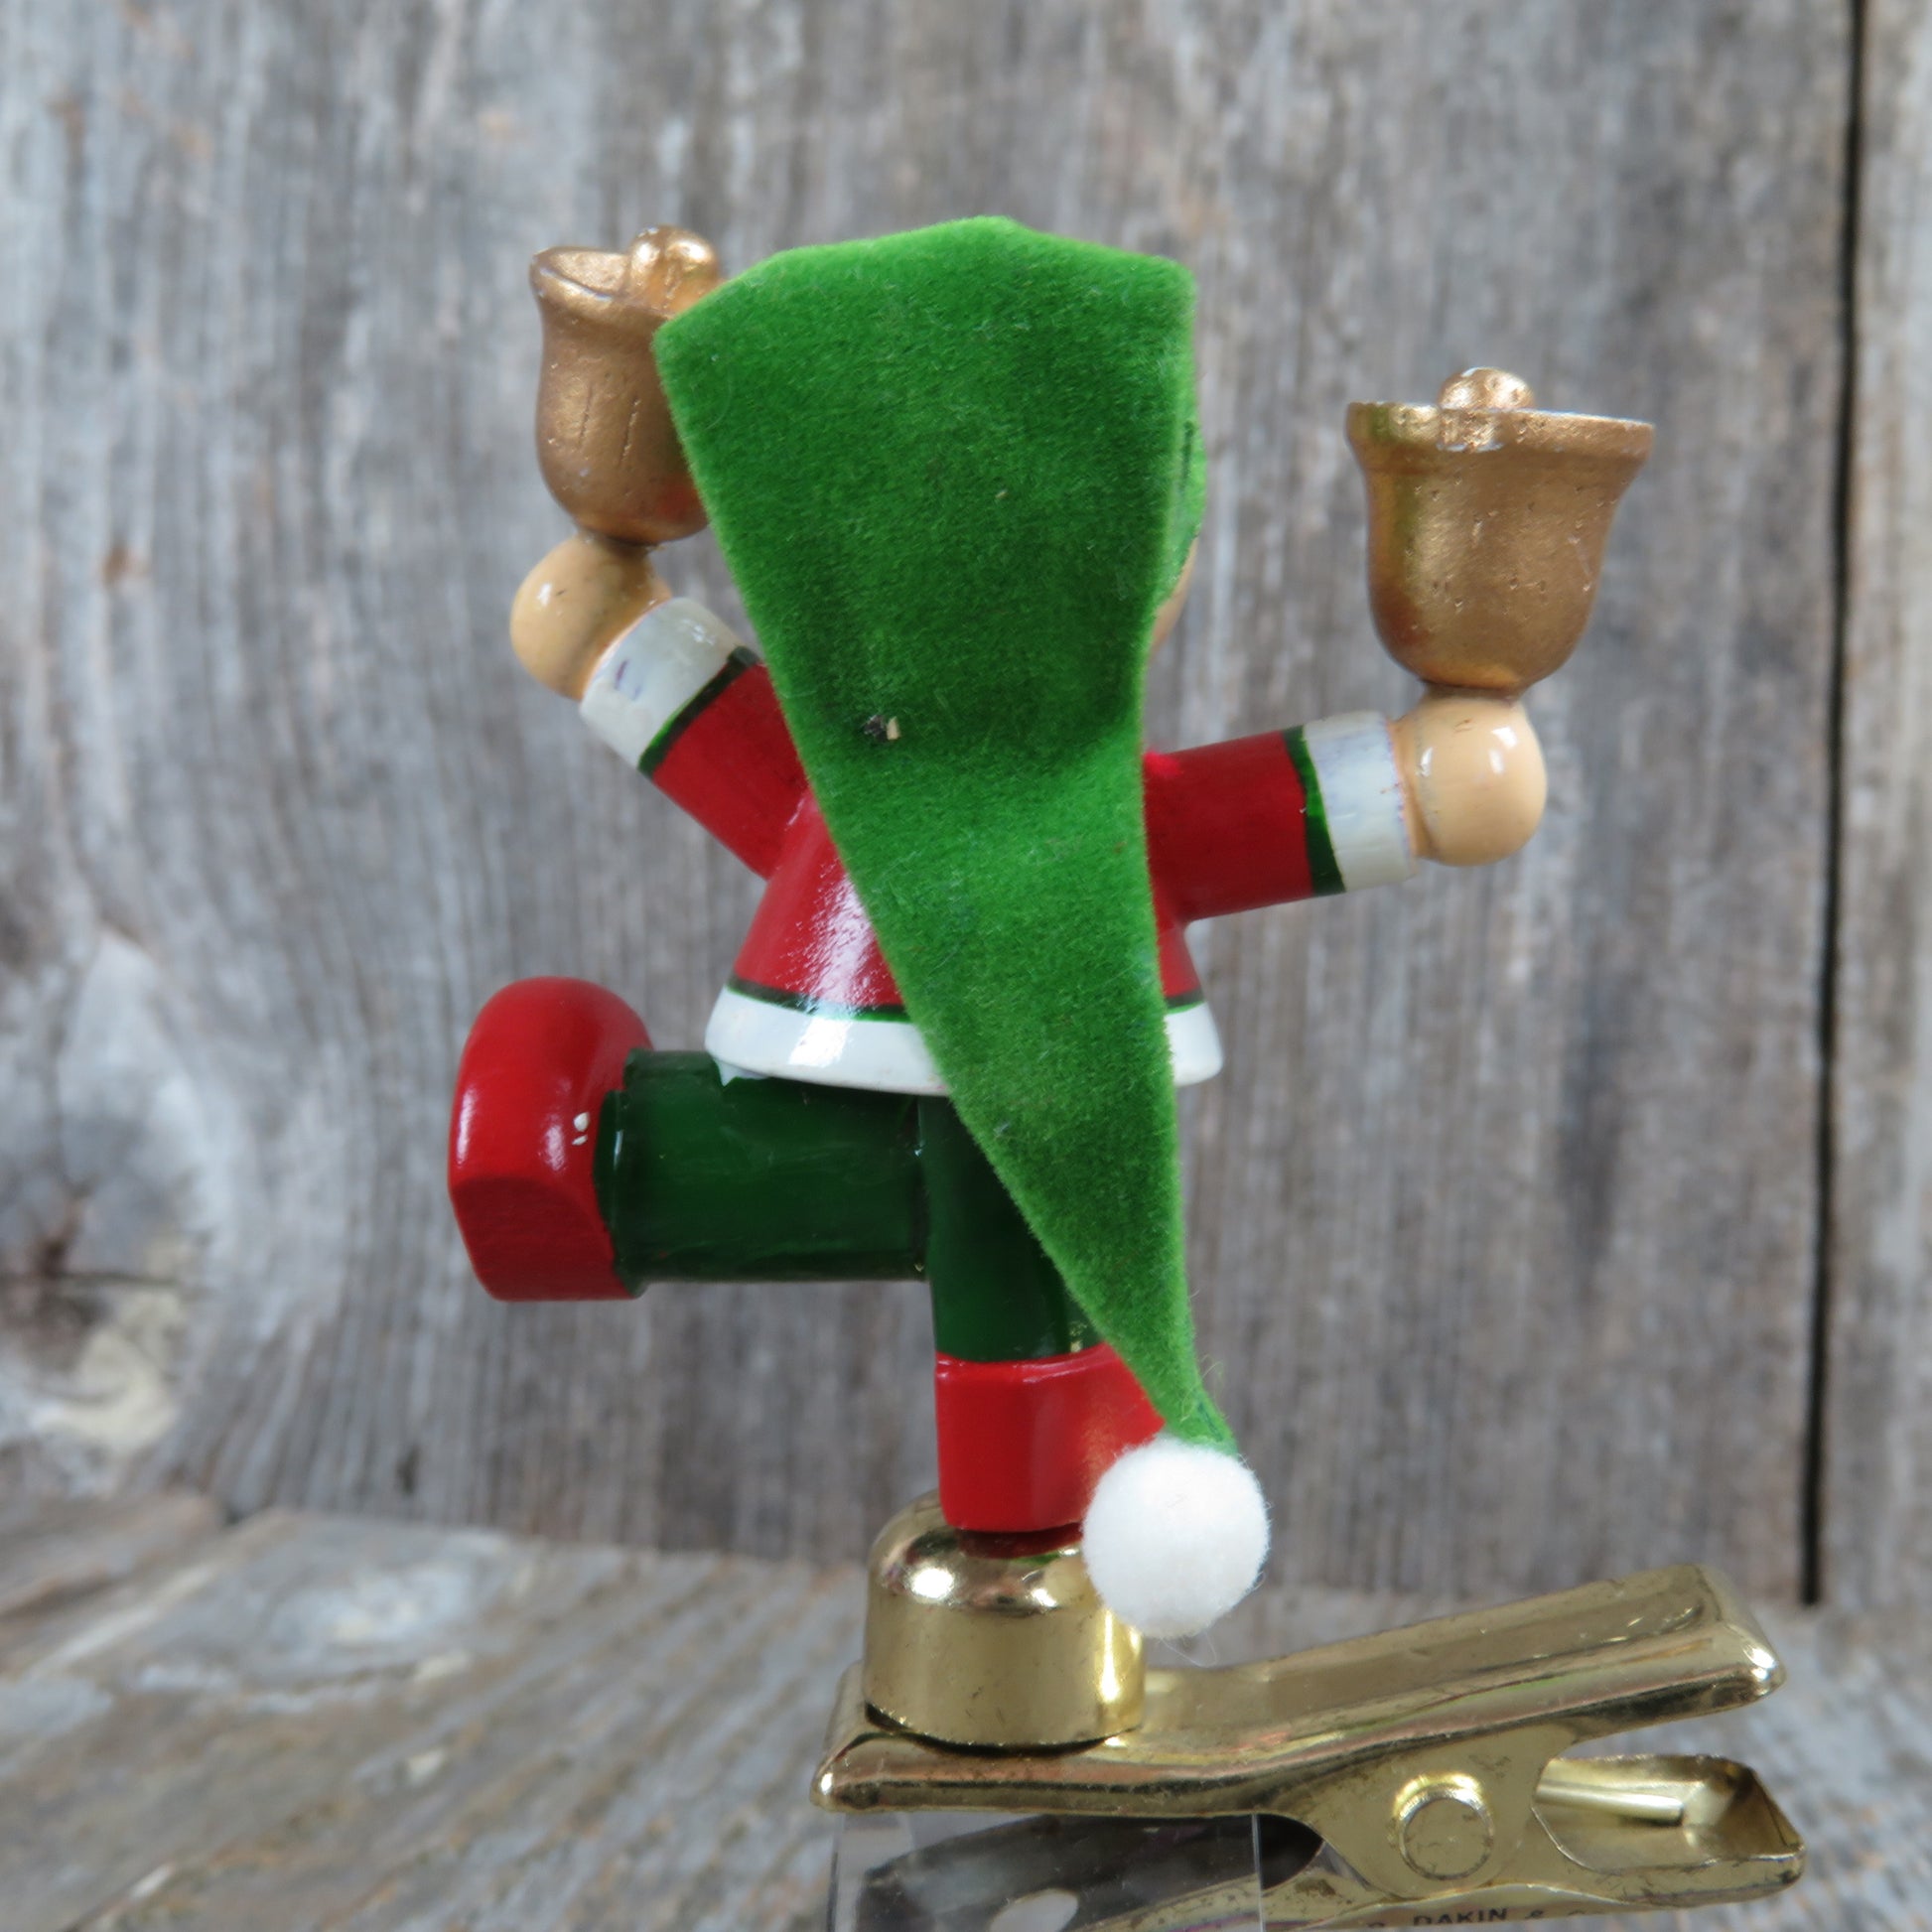 Vintage Jester Elf Bell Ringer Wooden Ornament Dakin Clip Christmas Wood 1985 - At Grandma's Table